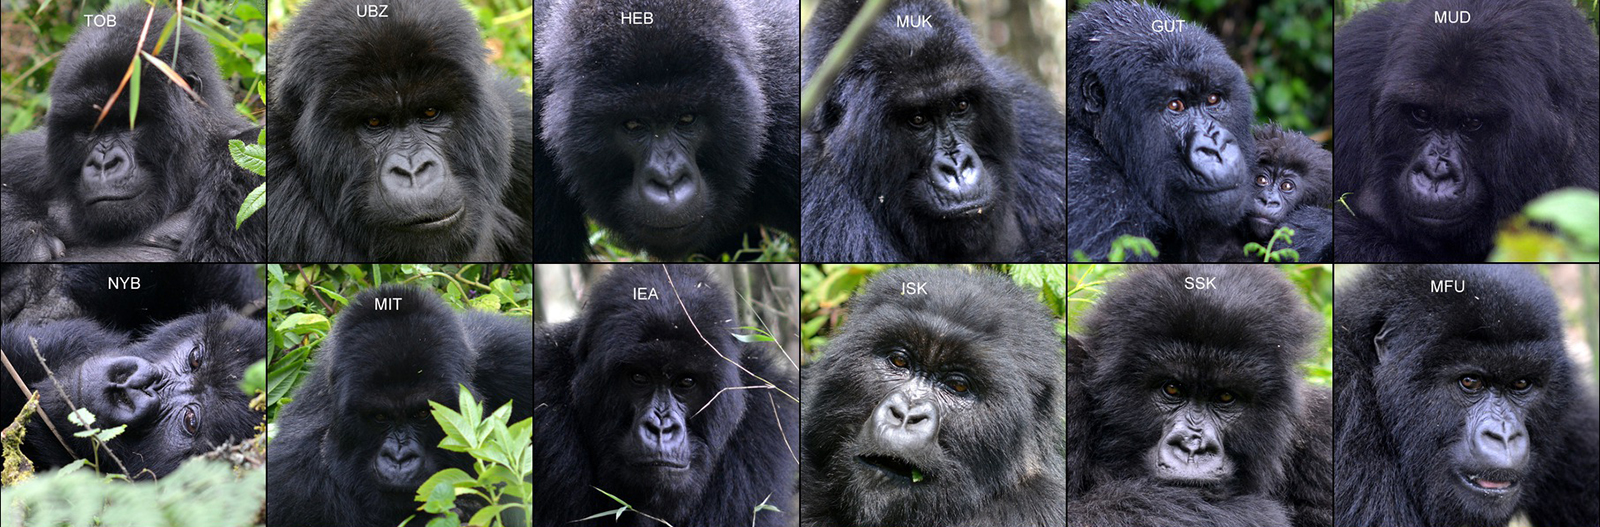 Do all gorillas have the same nose print?